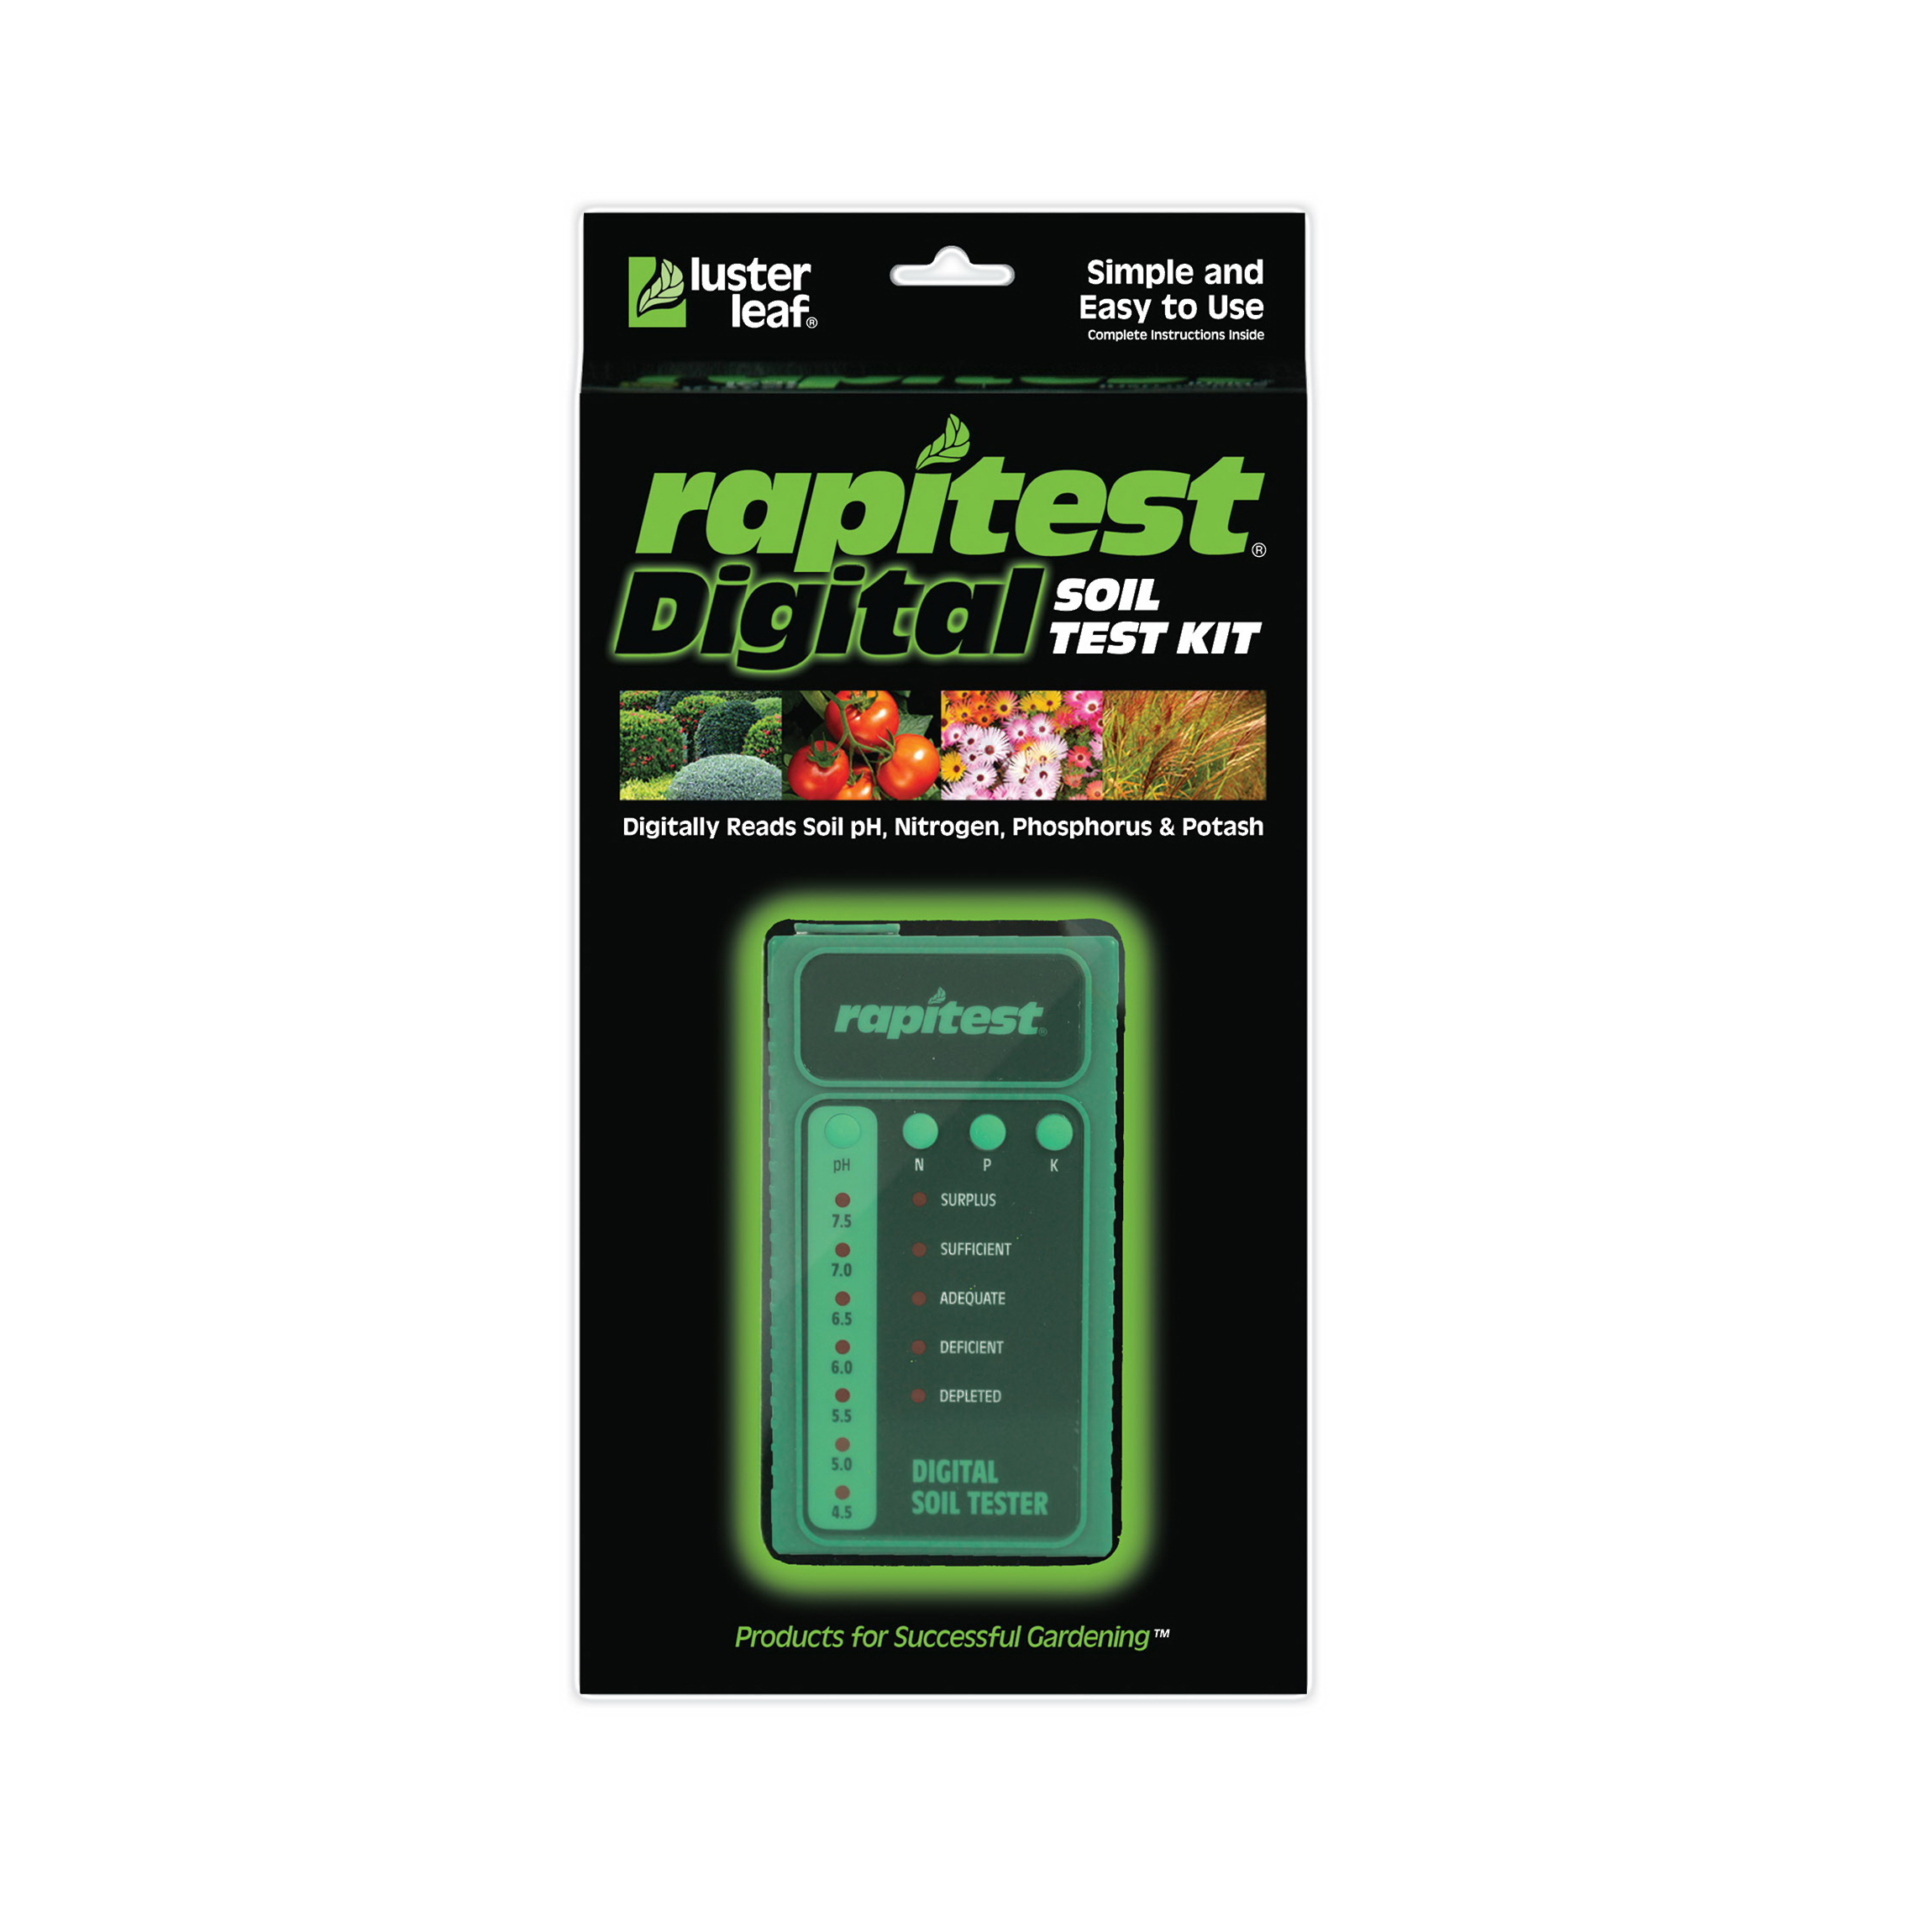 luster leaf Rapitest 1605 Digital Soil Test Kit - 1